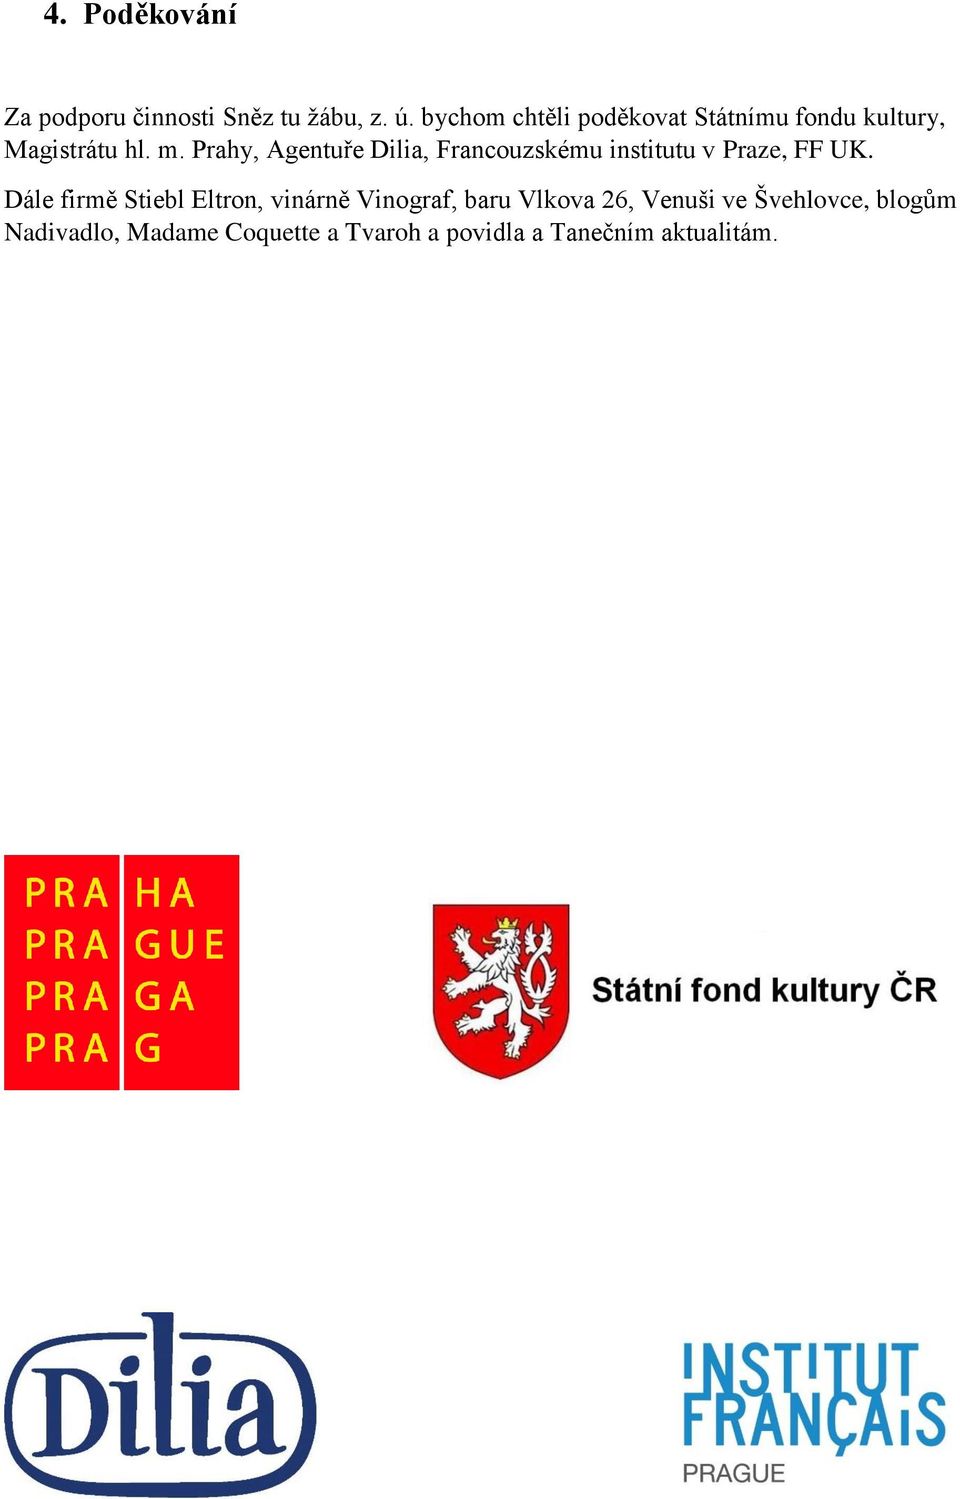 Prahy, Agentuře Dilia, Francouzskému institutu v Praze, FF UK.